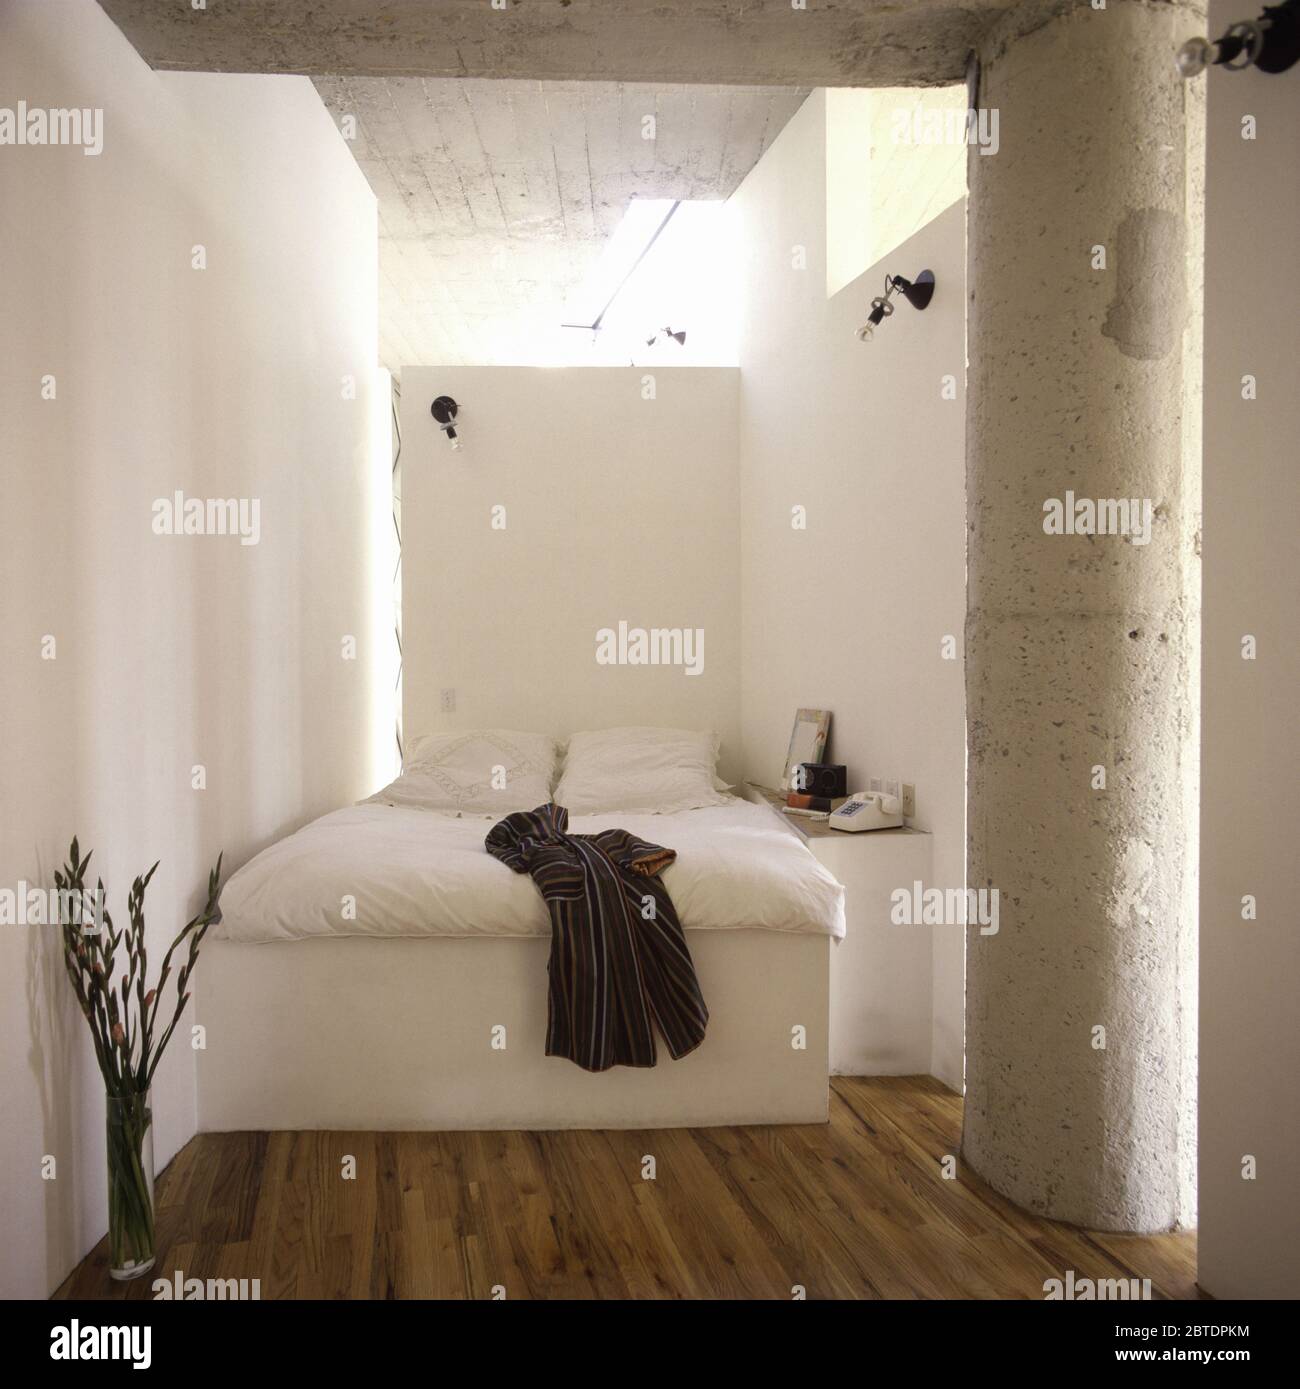 Cama de concreto fotografías e imágenes de alta resolución - Alamy